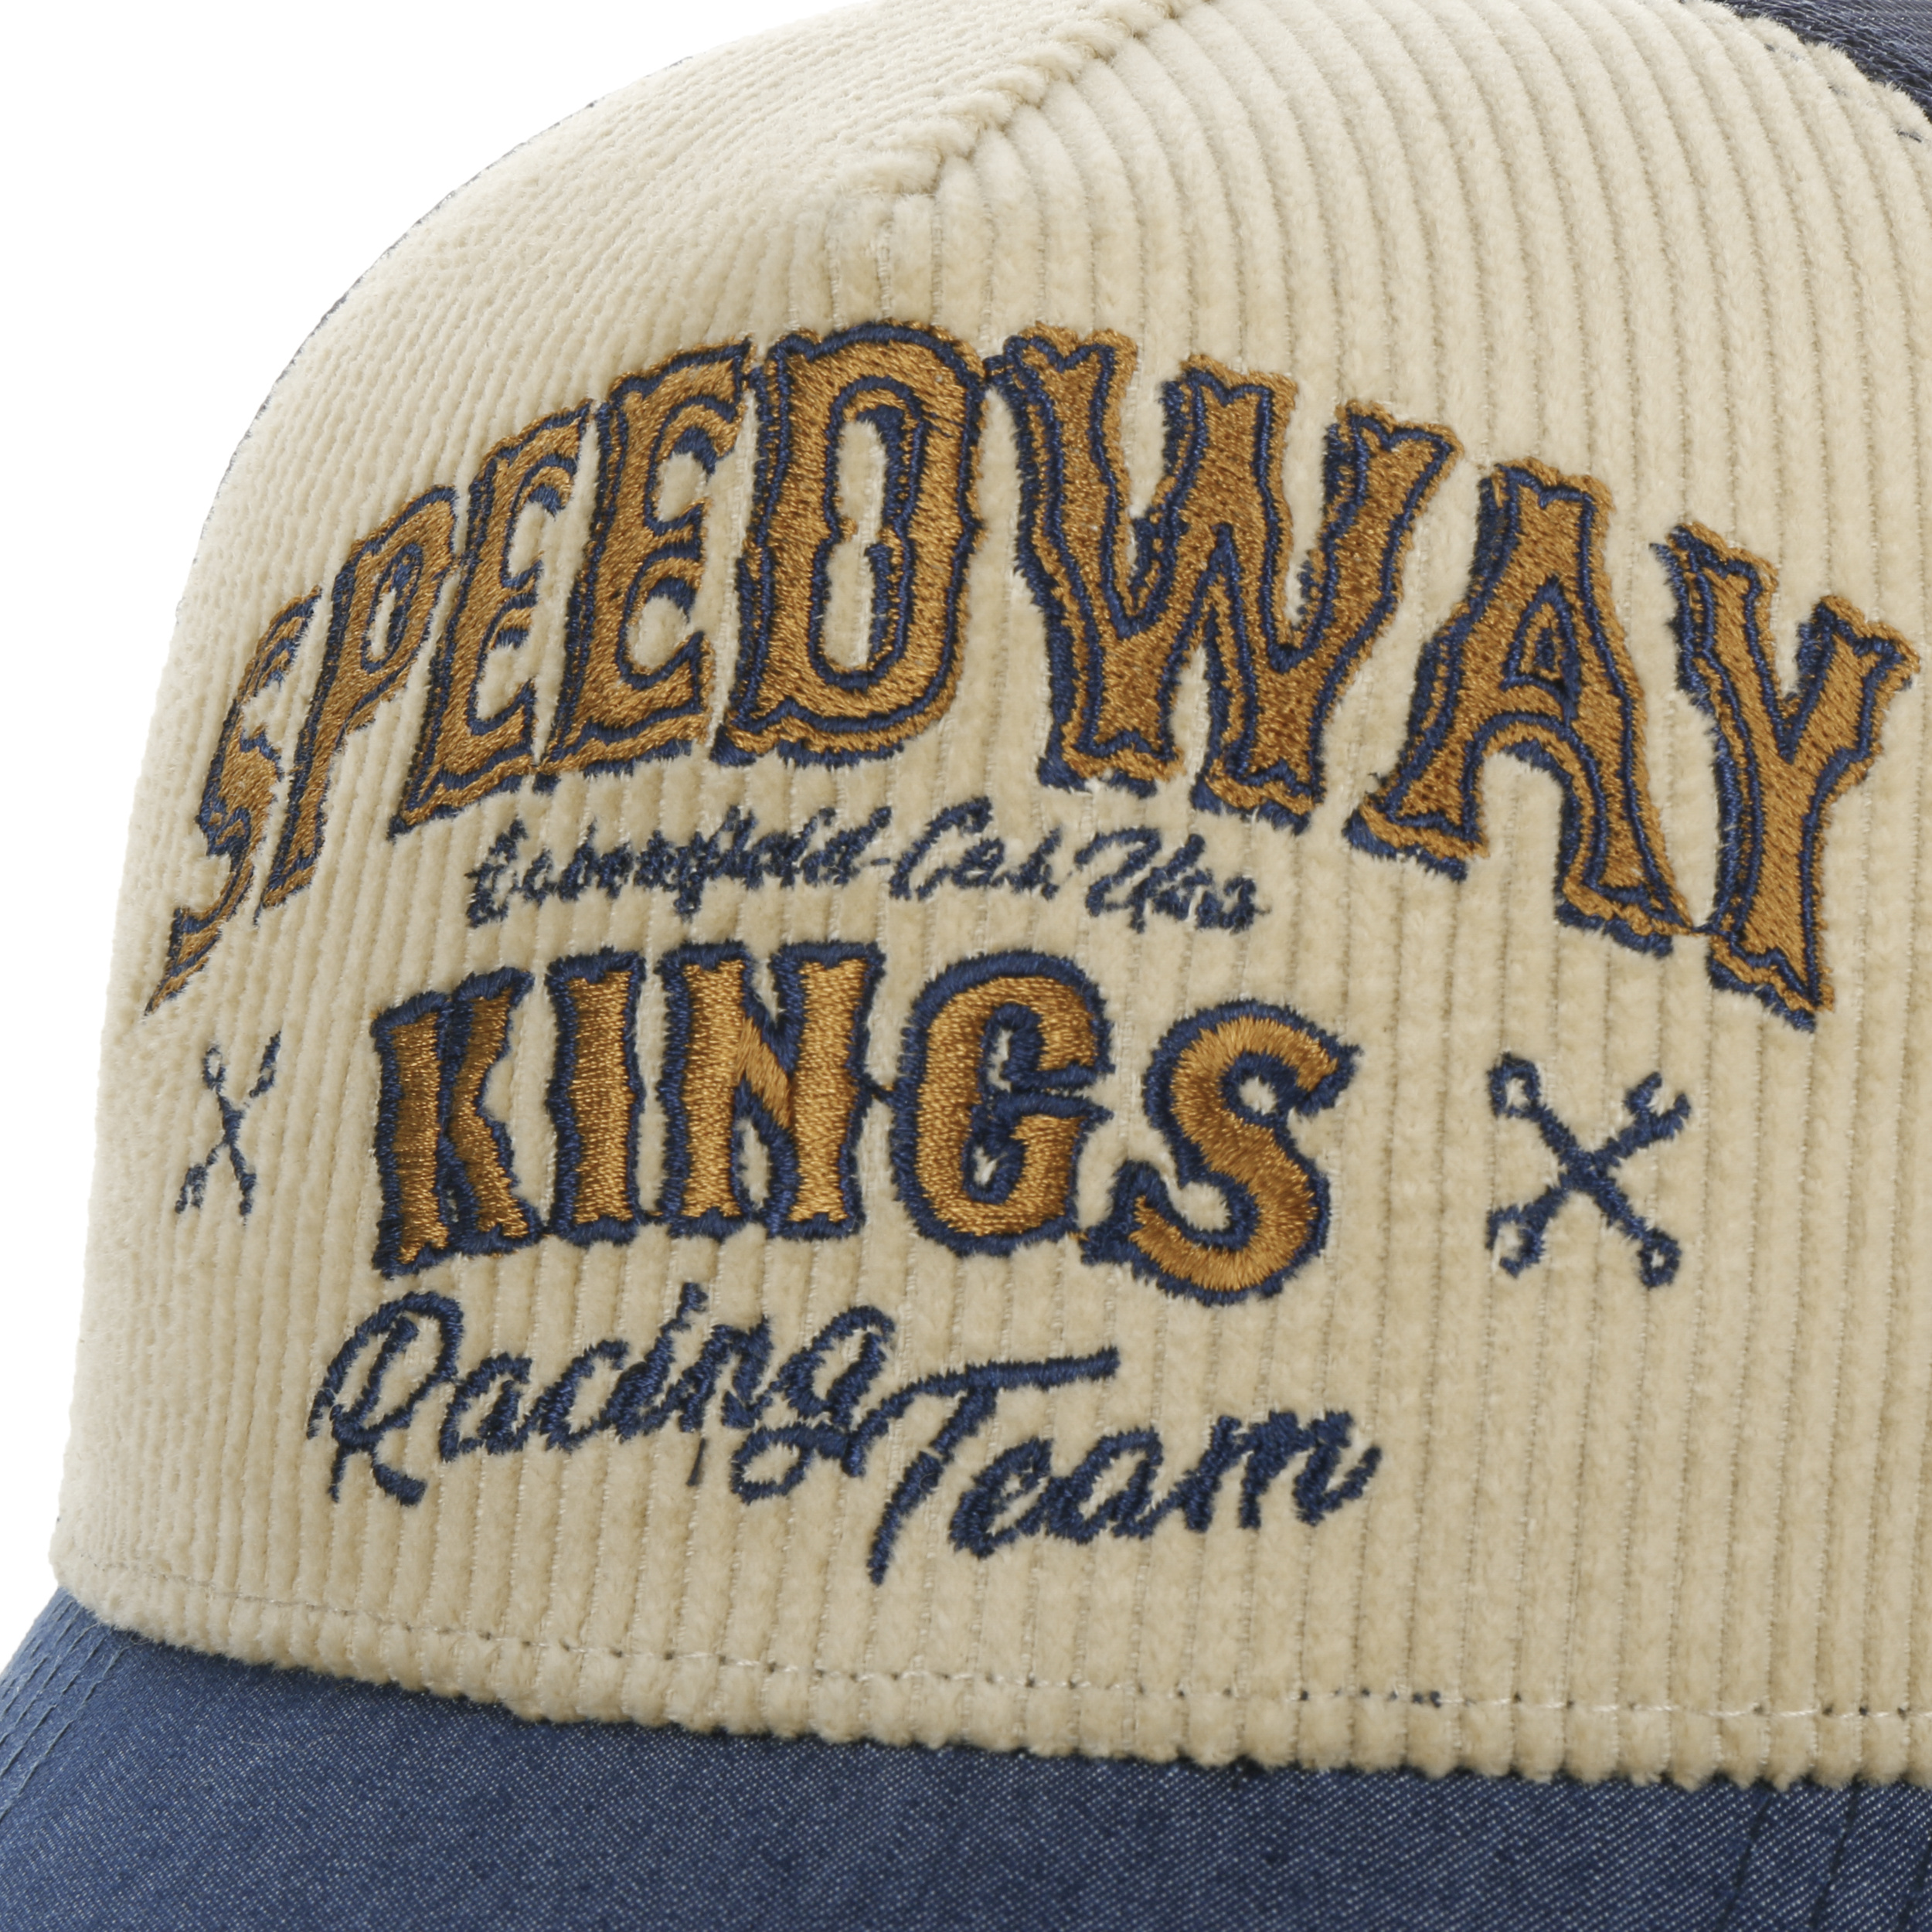 Strickmütze Speedway Kings von King Kerosin, Beanies, Caps & Mützen, Kategorien, Outfit